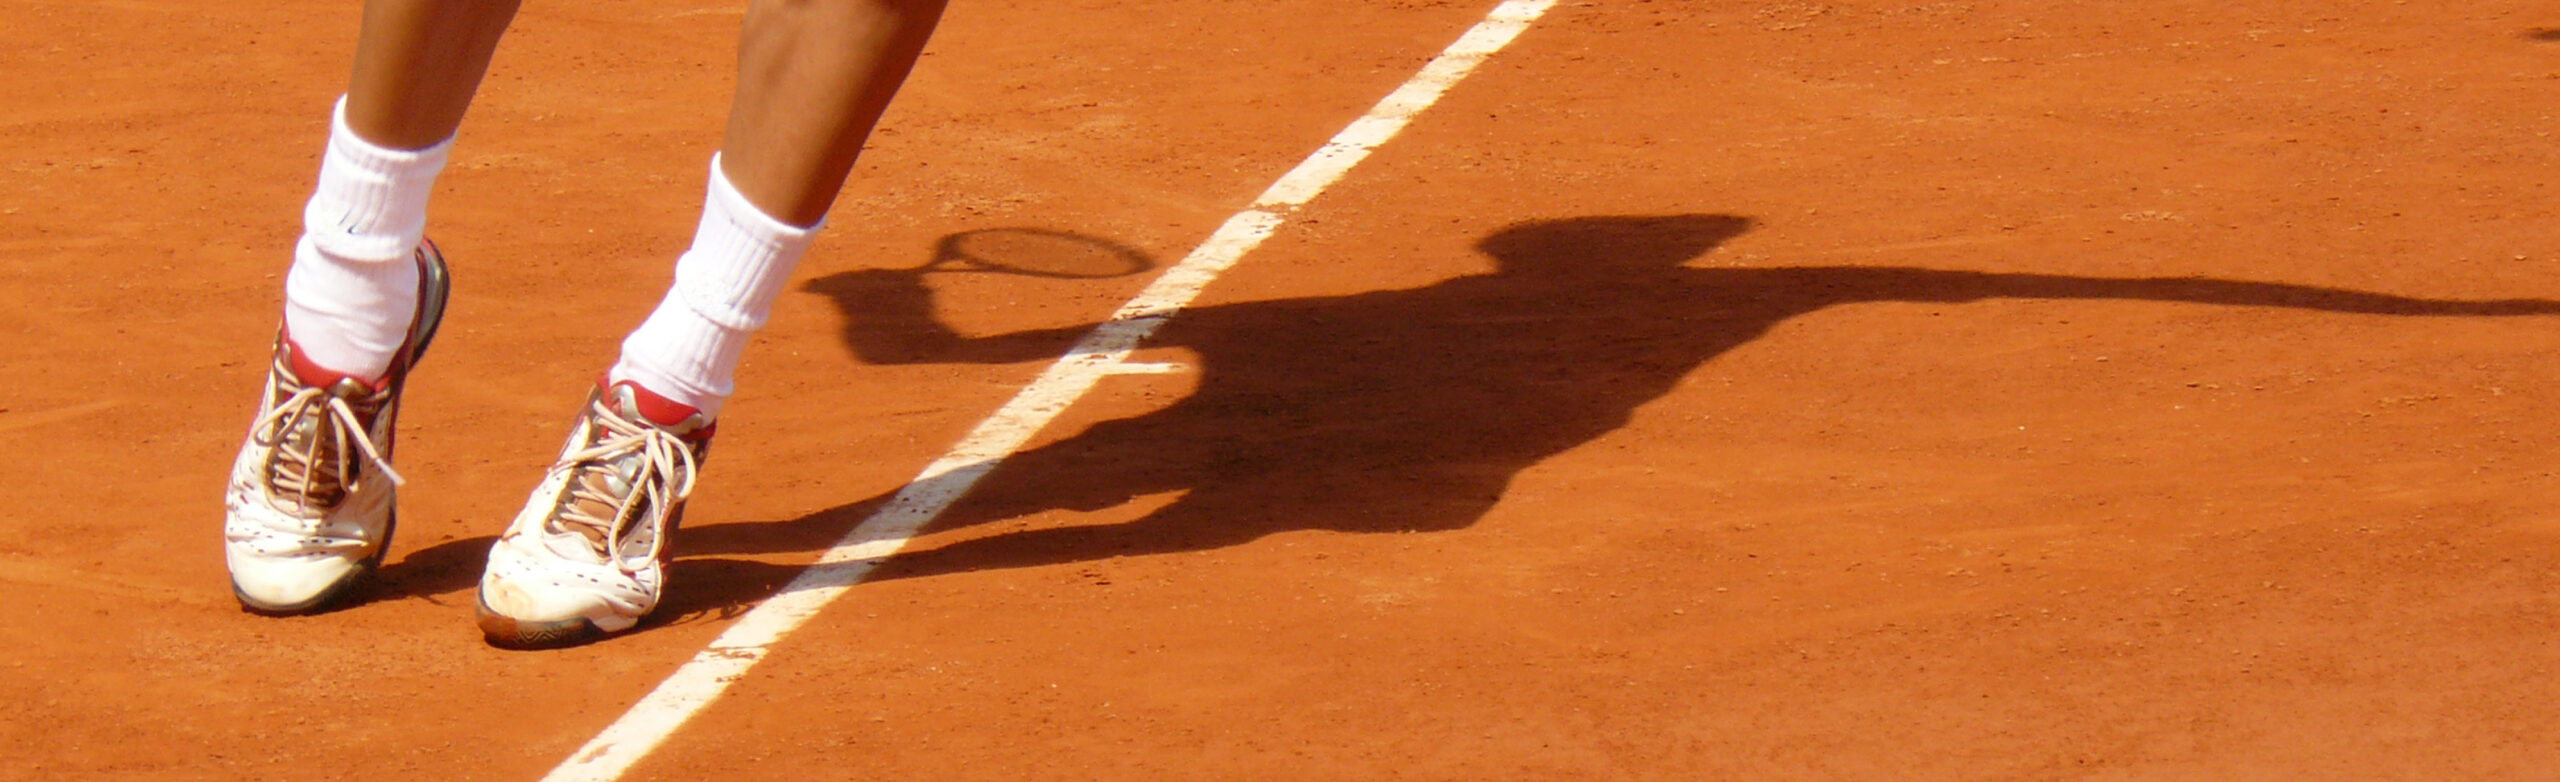 Flights-to-Paris-French-Open-Tennis-Court